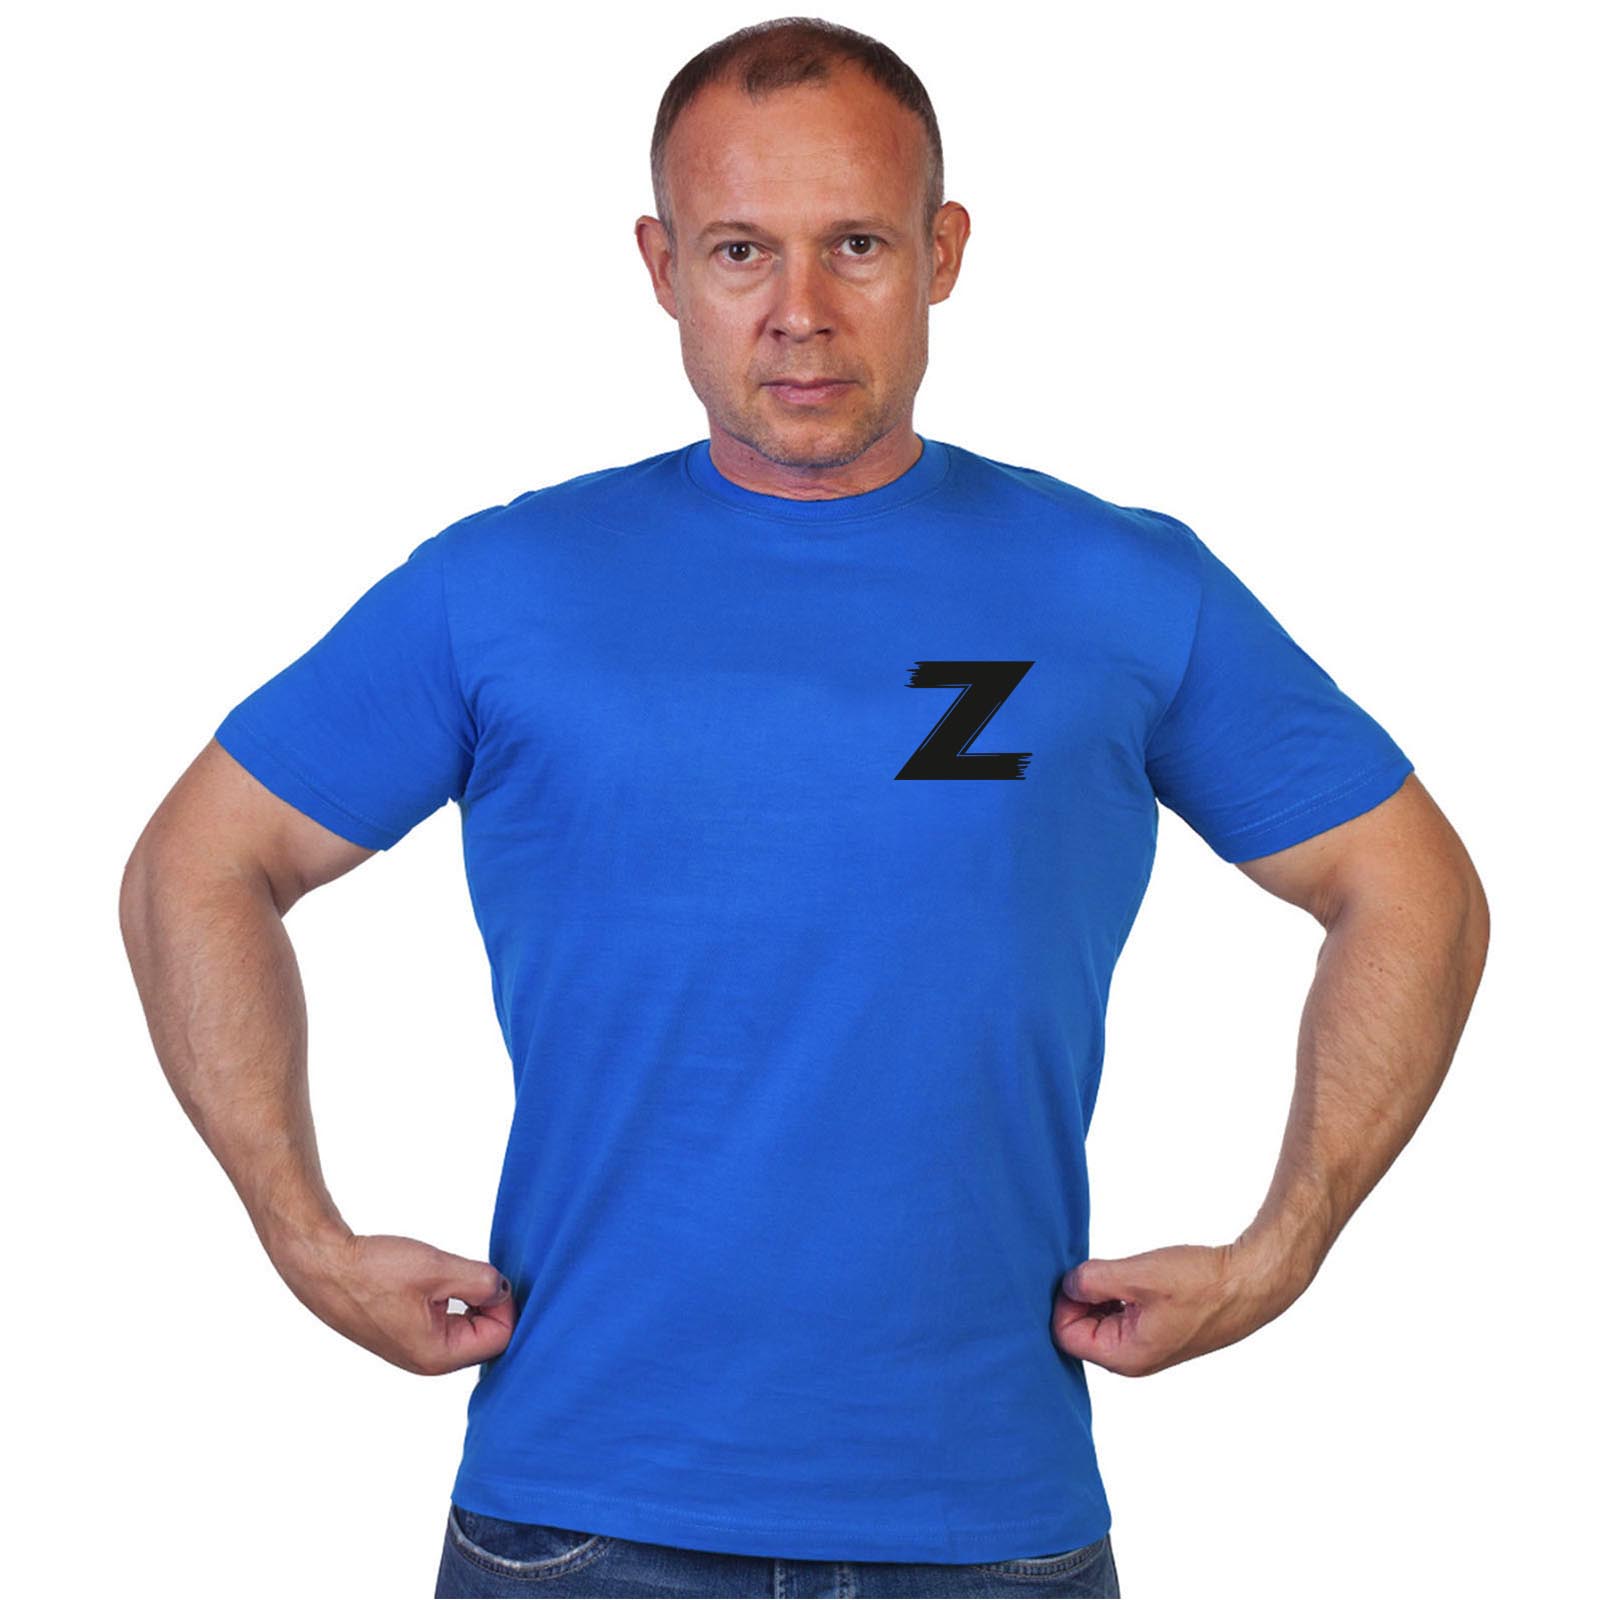 Васильковая футболка с термотрансфером Z